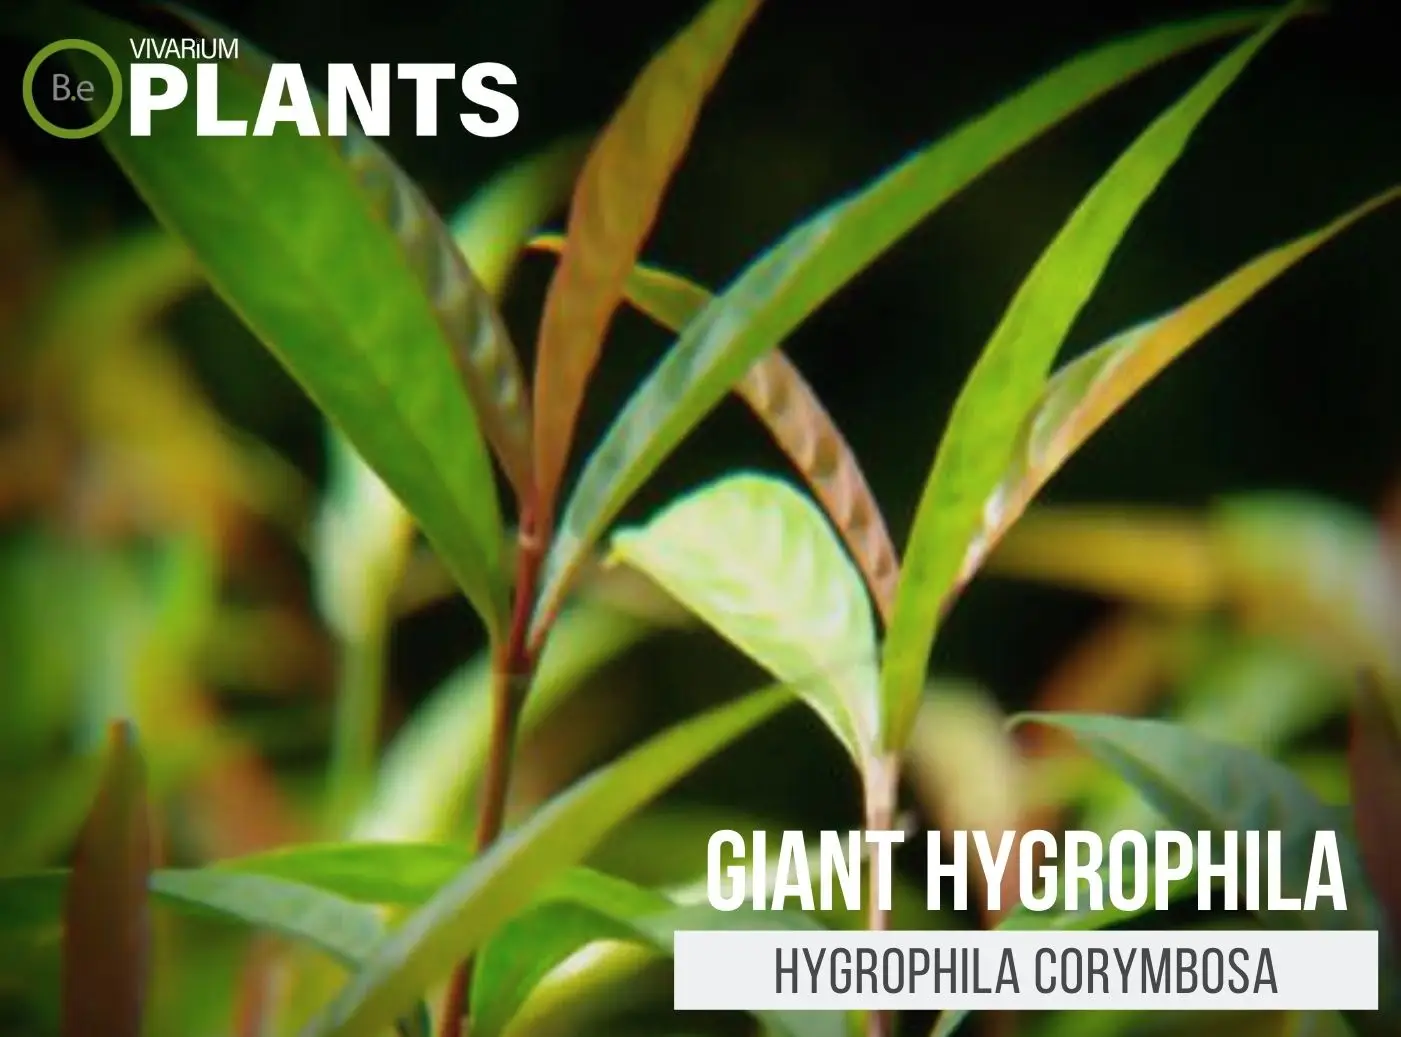 Hygrophila corymbosa "Giant Hygrophila" Plant Care Guide